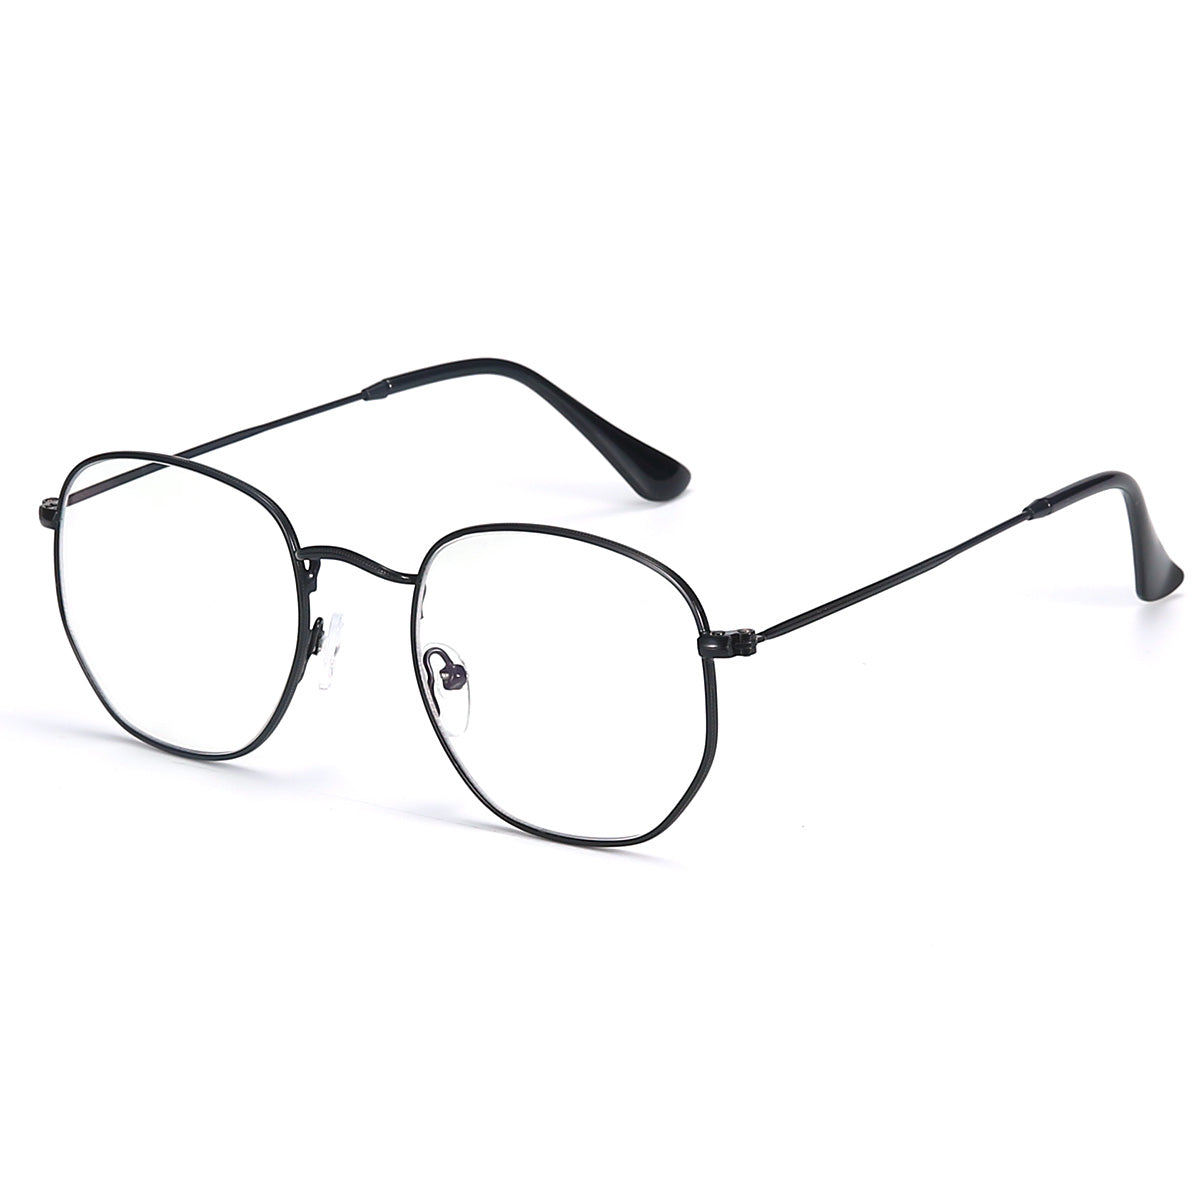 Sunglasses,specsmart, spec smart, glasses, eye glasses glasses frames, where to get glasses in lagos, eye treatment, wellness health care group, ACCESS RILEY